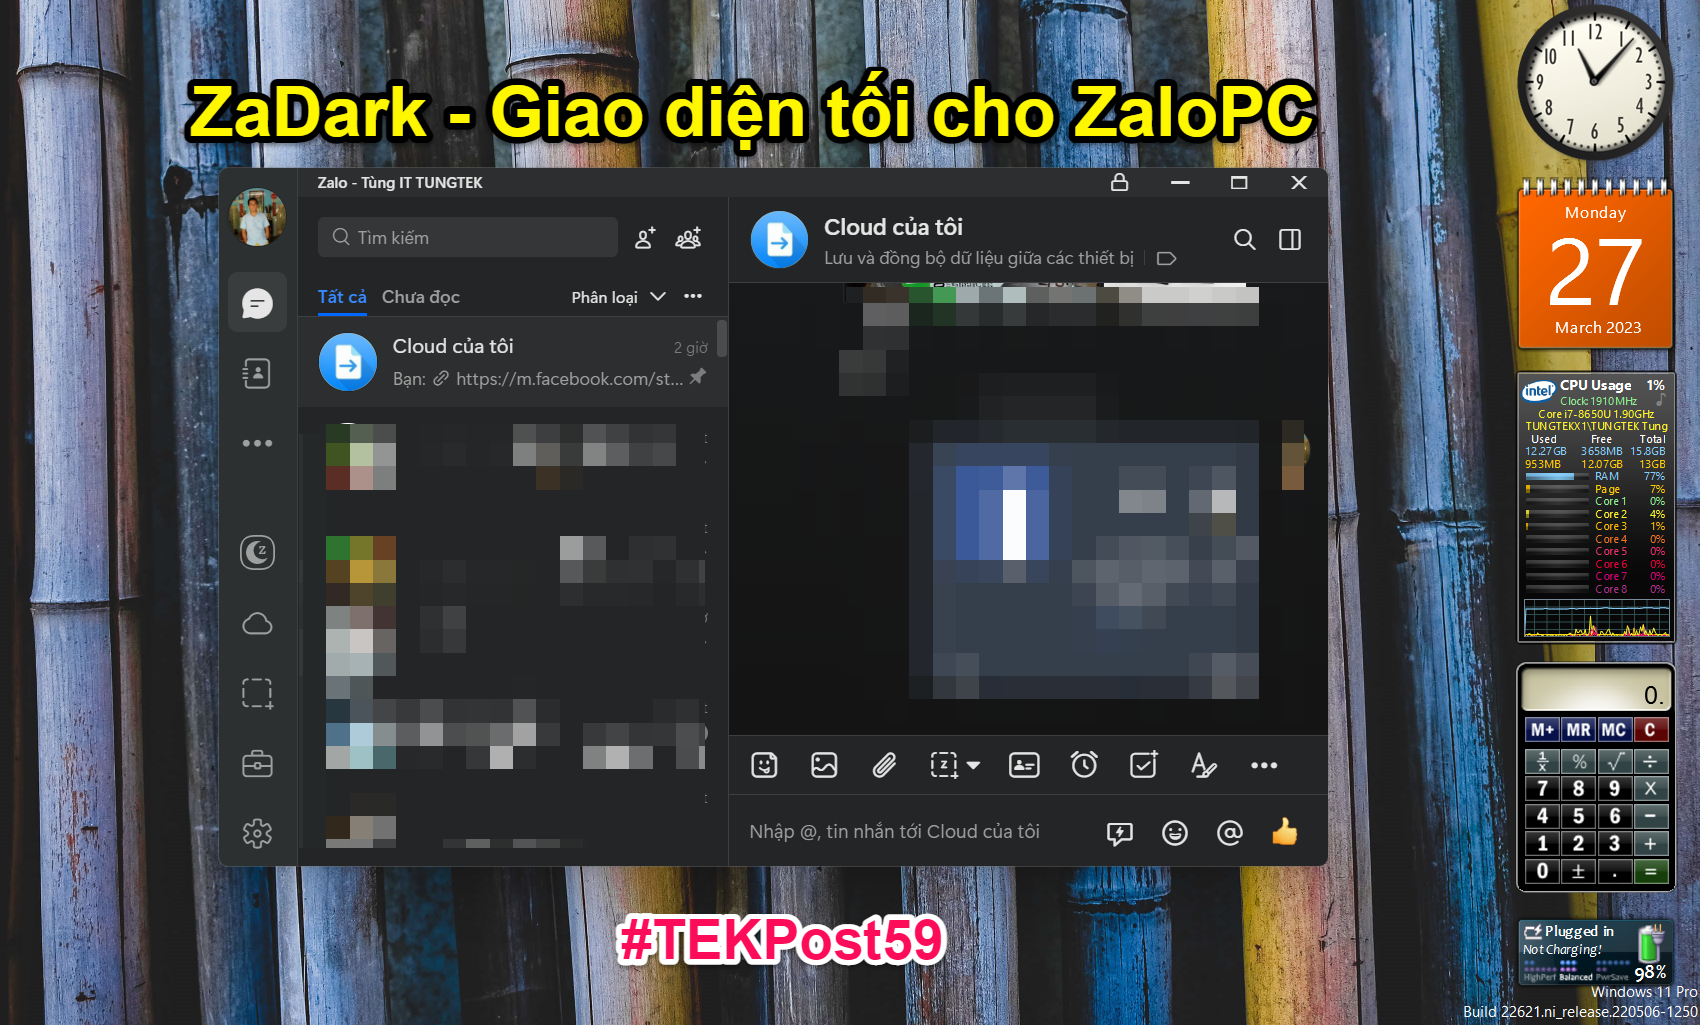 ZaDark hay giao diện tối cho ZaloPC - #TEKPost59